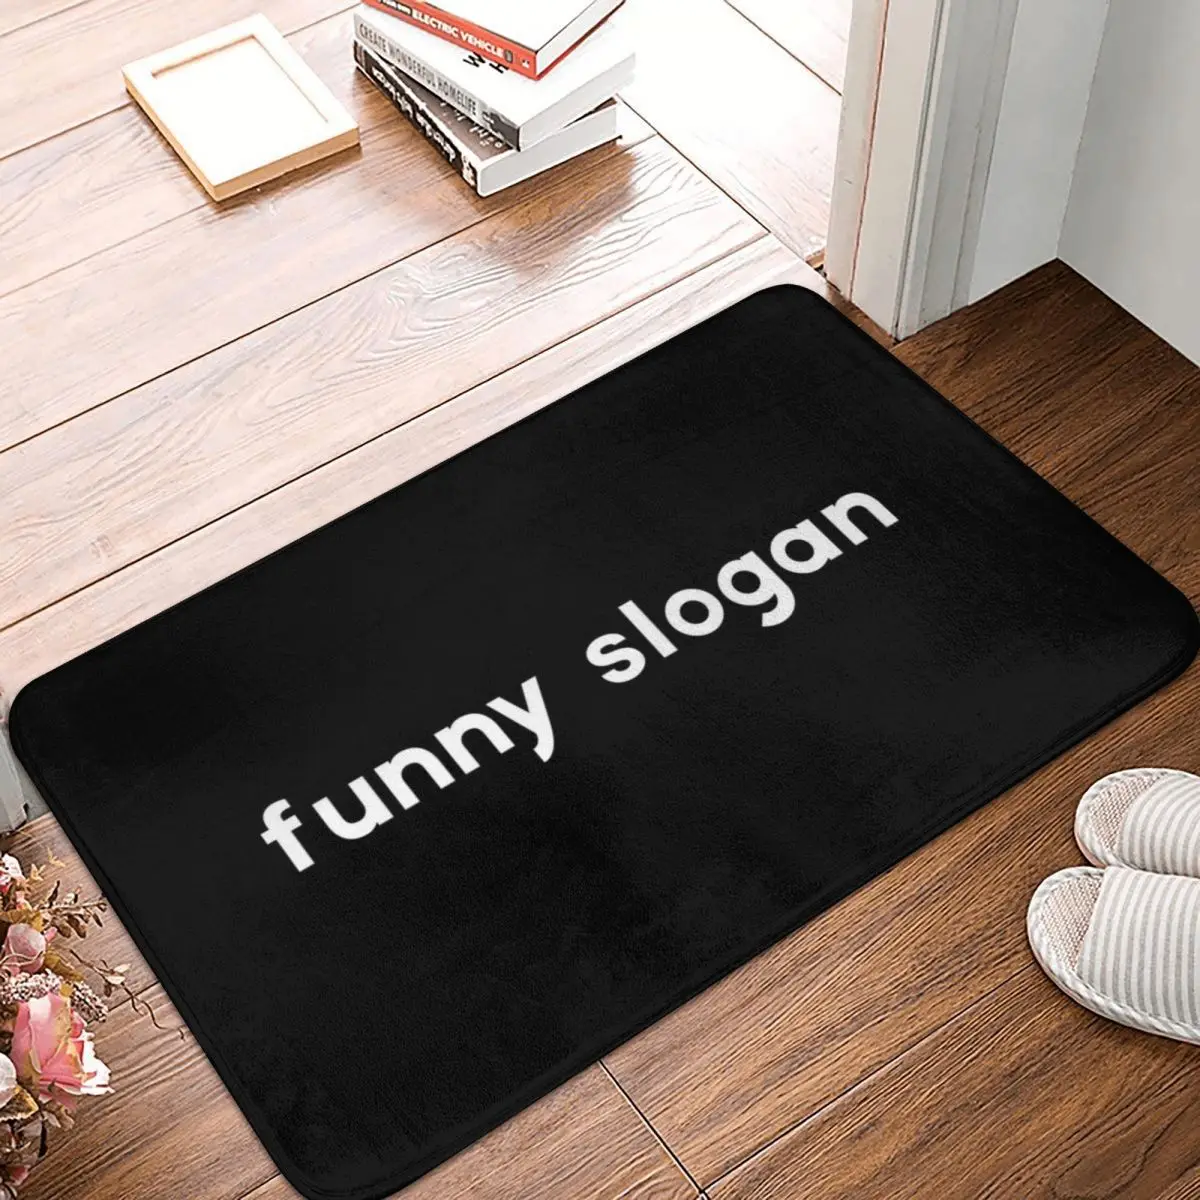 

Funny Slogan Cool Quote Fashion Humor Bath Door Mat Rug Carpet Decor Entrance Living Room Home Kitchen Bathroom Non-slip Bedside